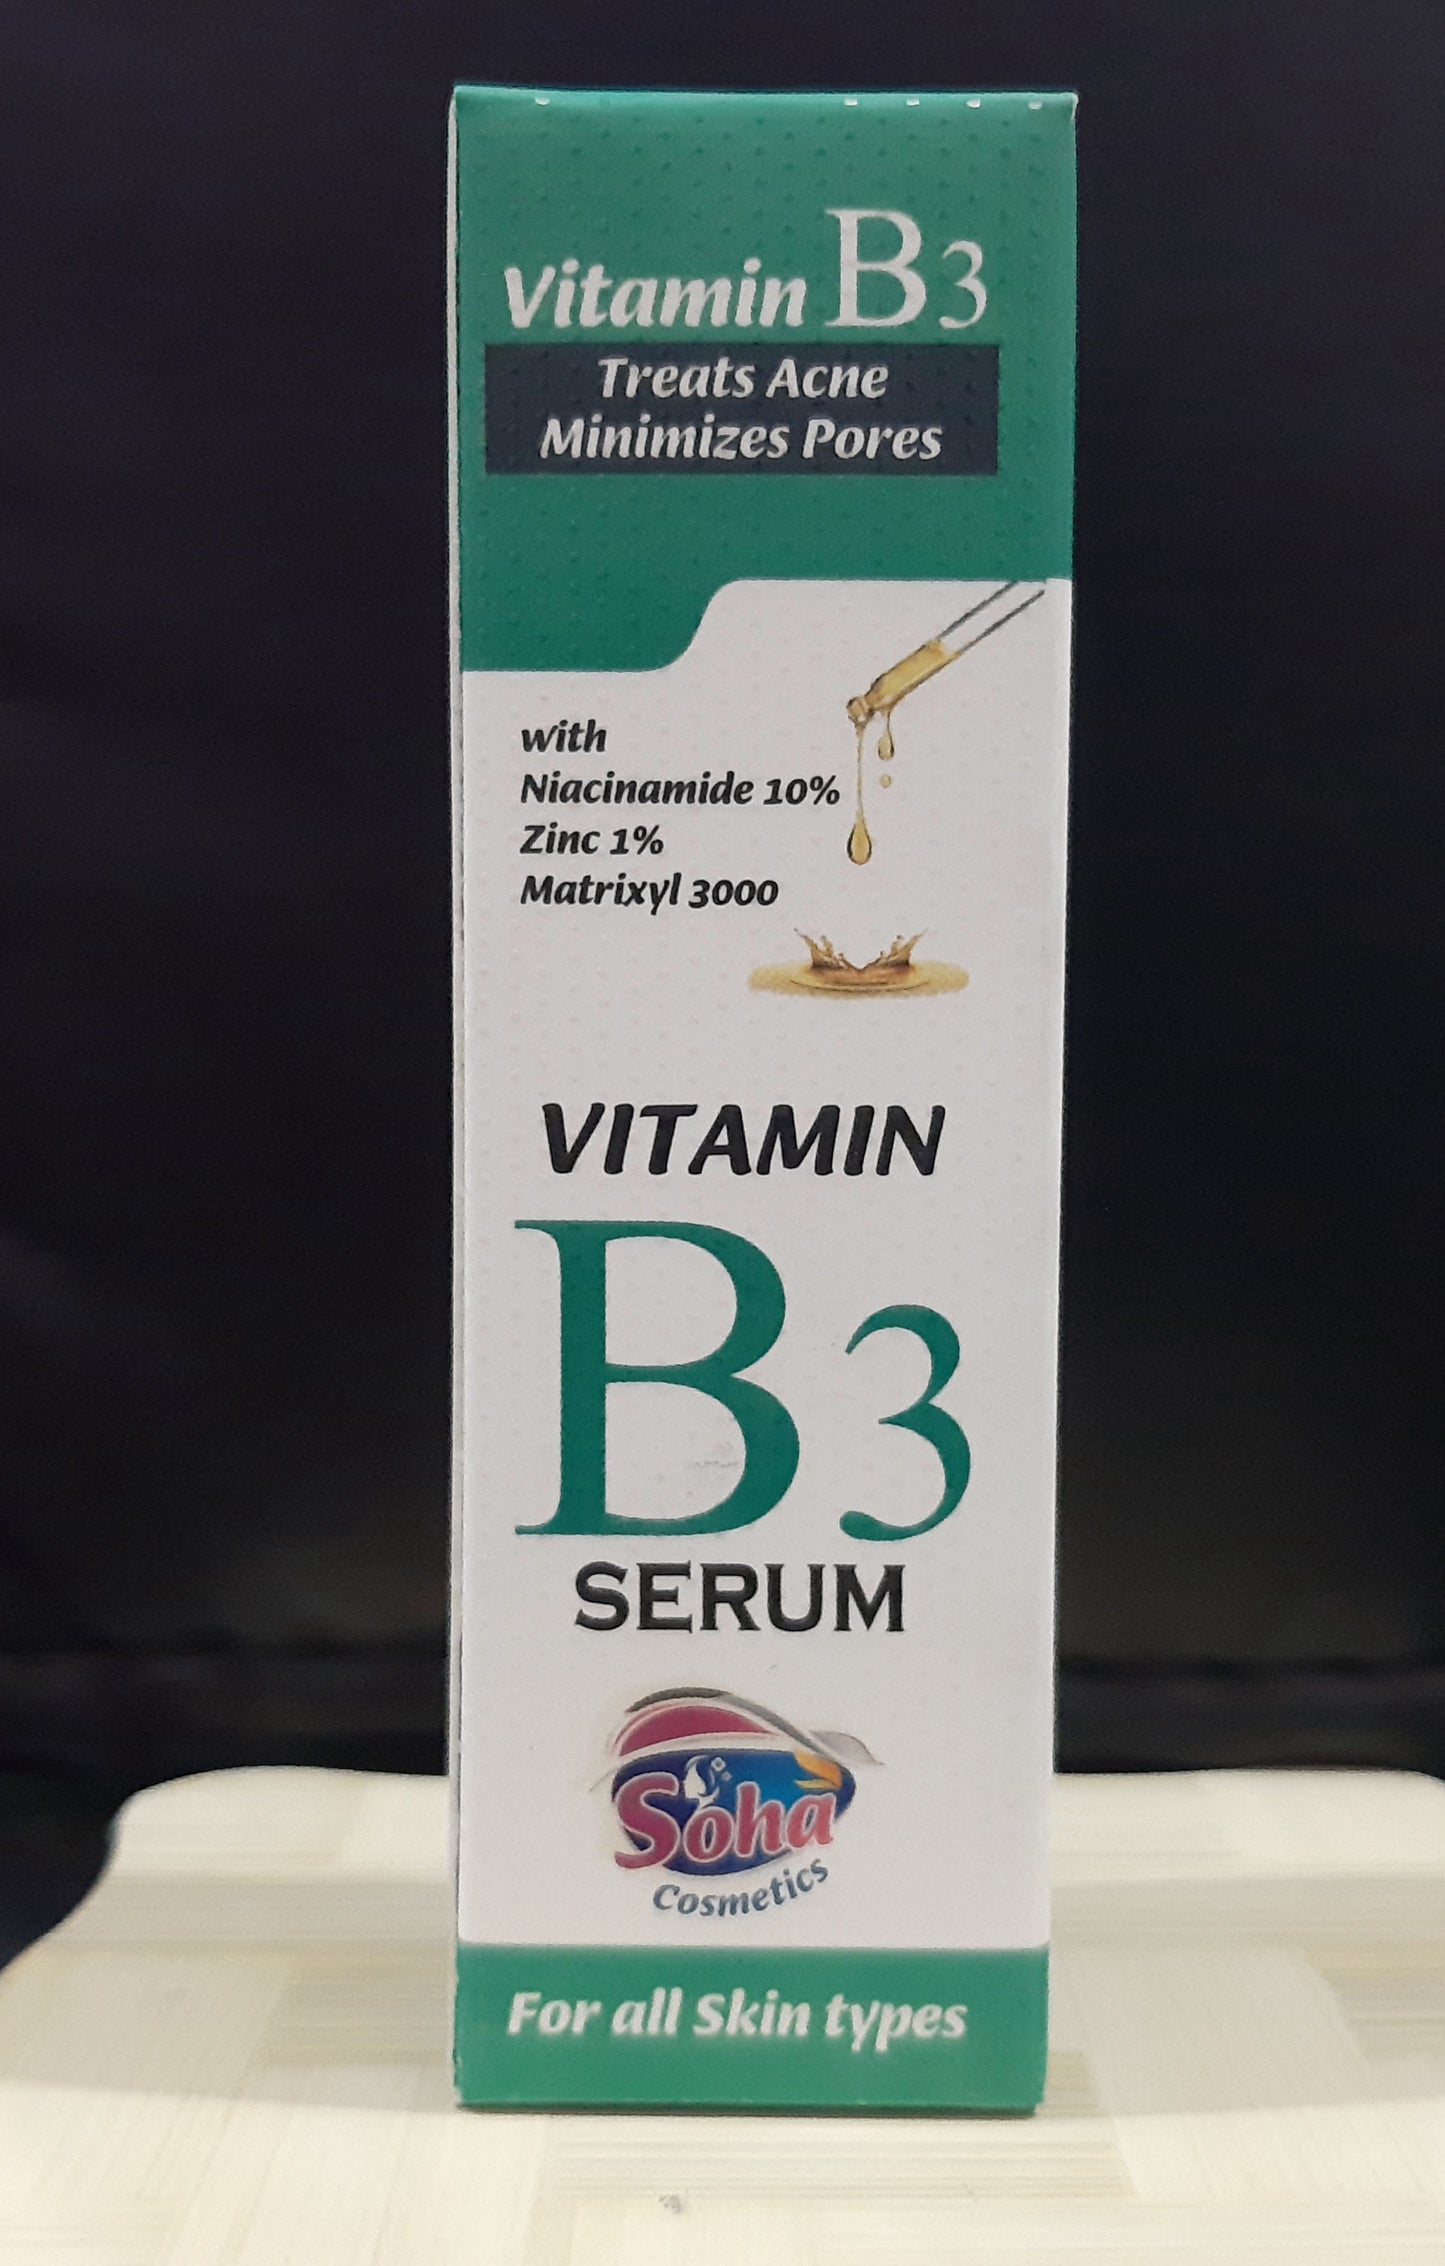 Vitamin B3 Serum for Acne, Pore Minimizing